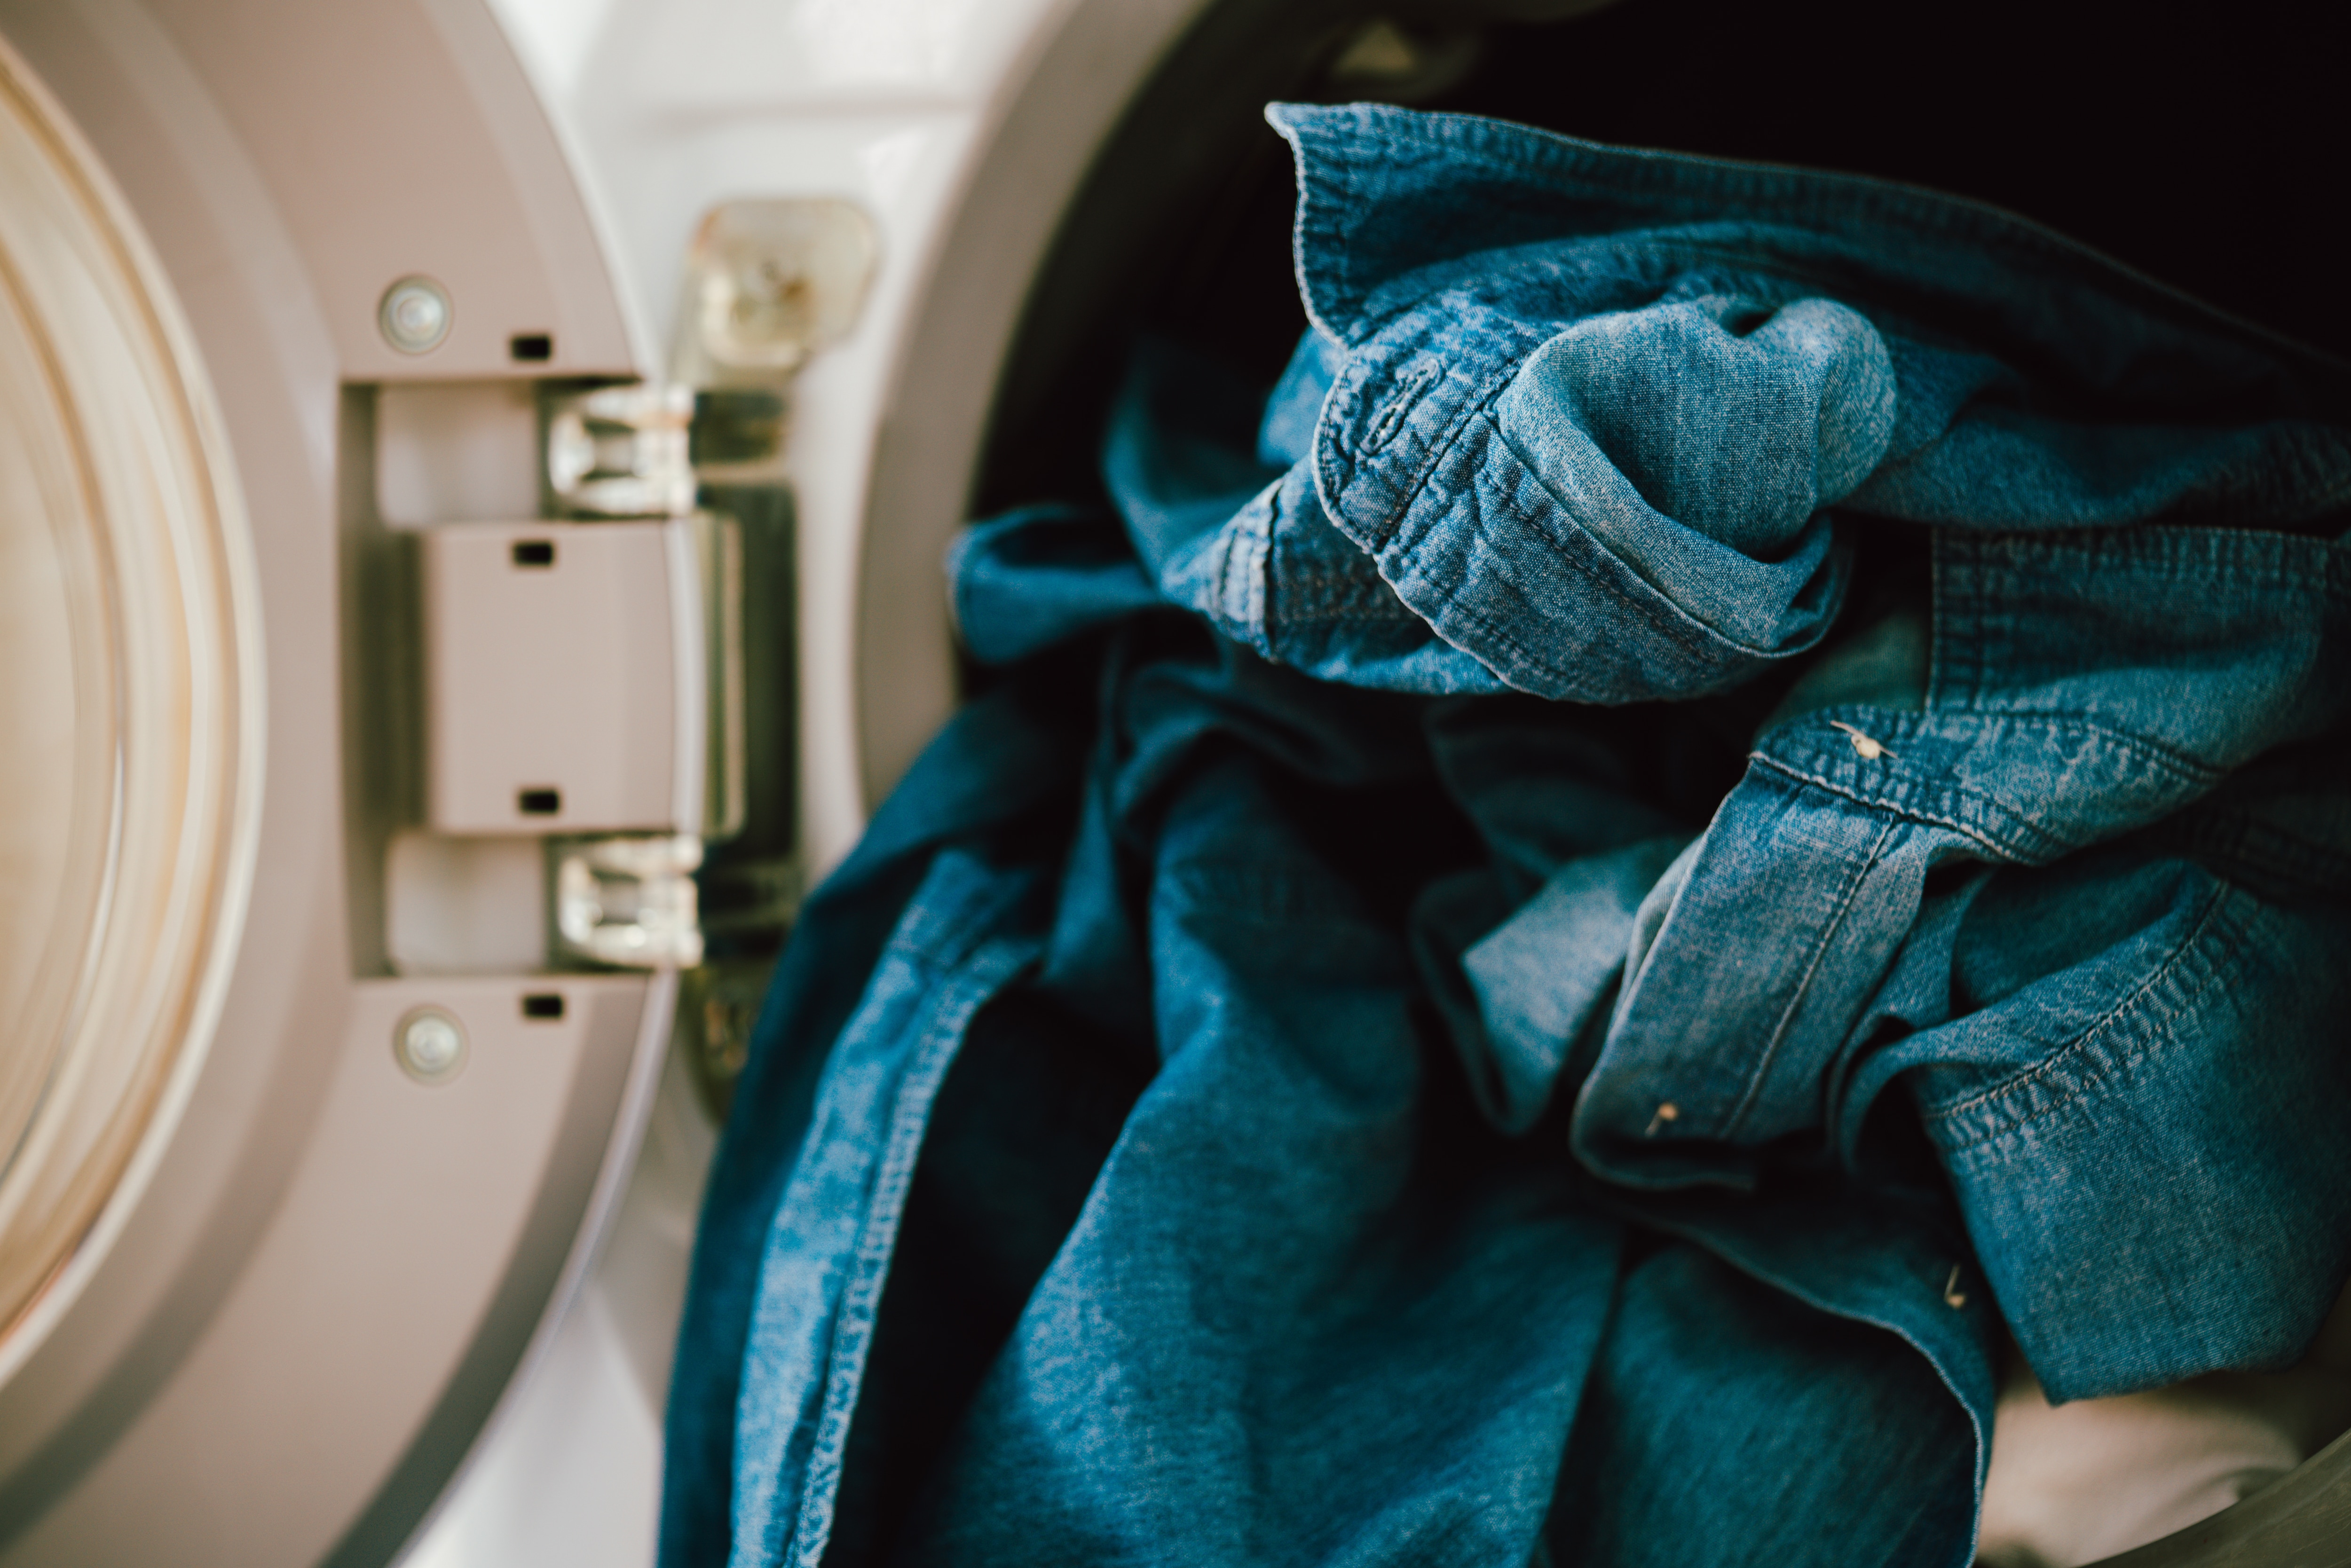 close-up-clothes-in-washing-machine-background-la-2022-11-17-16-37-50-utc.jpg